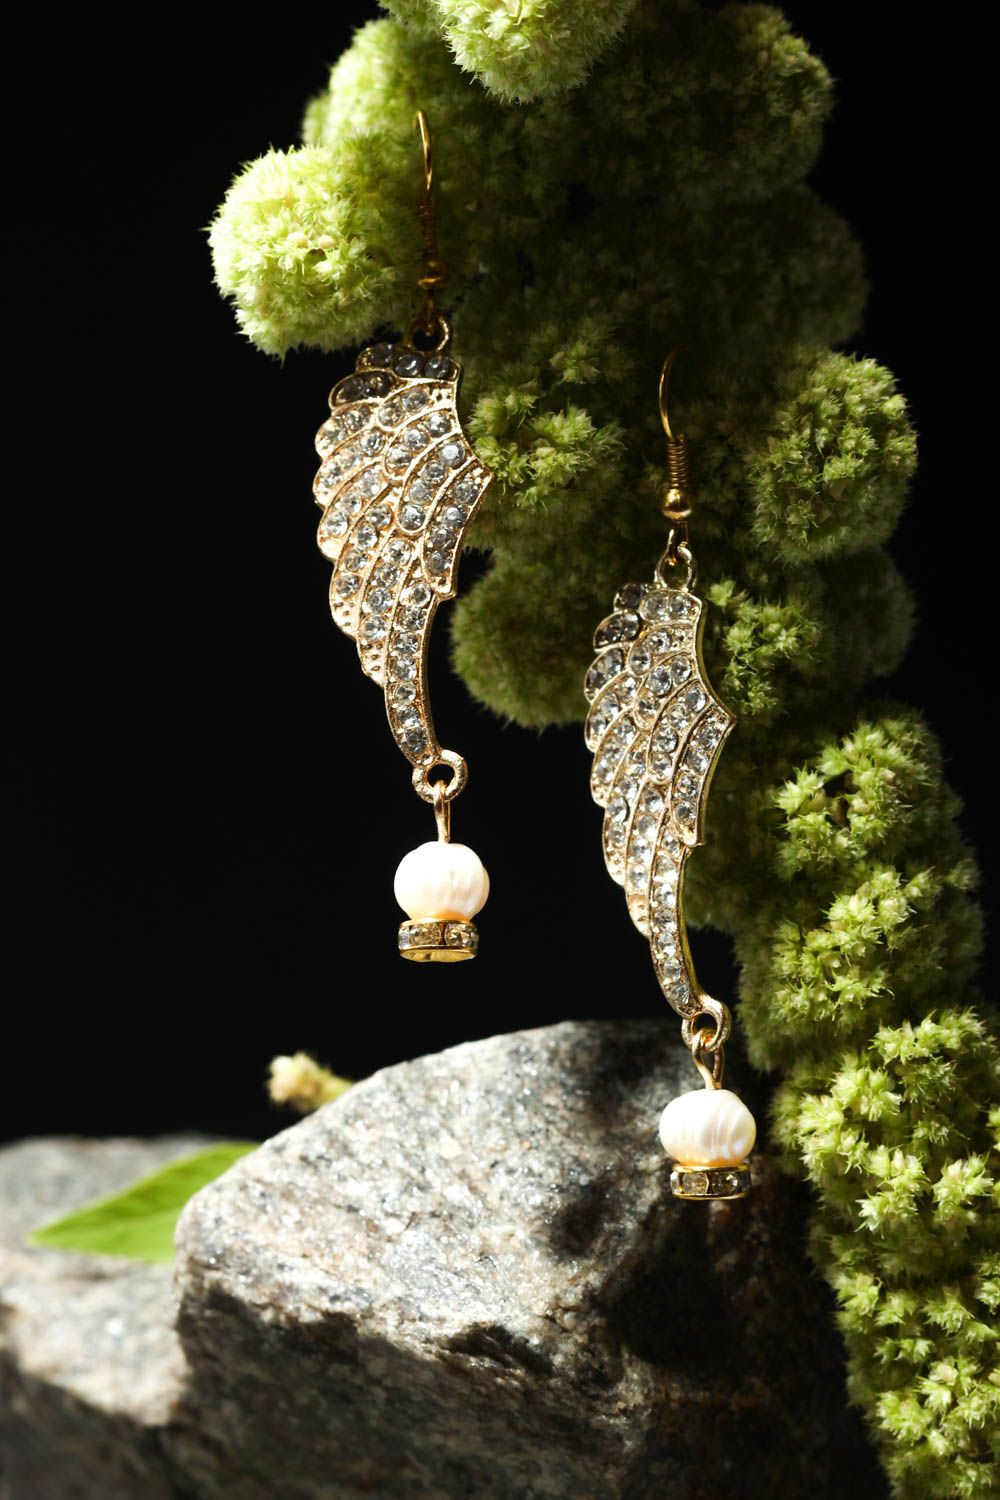 Handmade earrings designer earrings unusual gift elite jewelry gift ideas photo 1